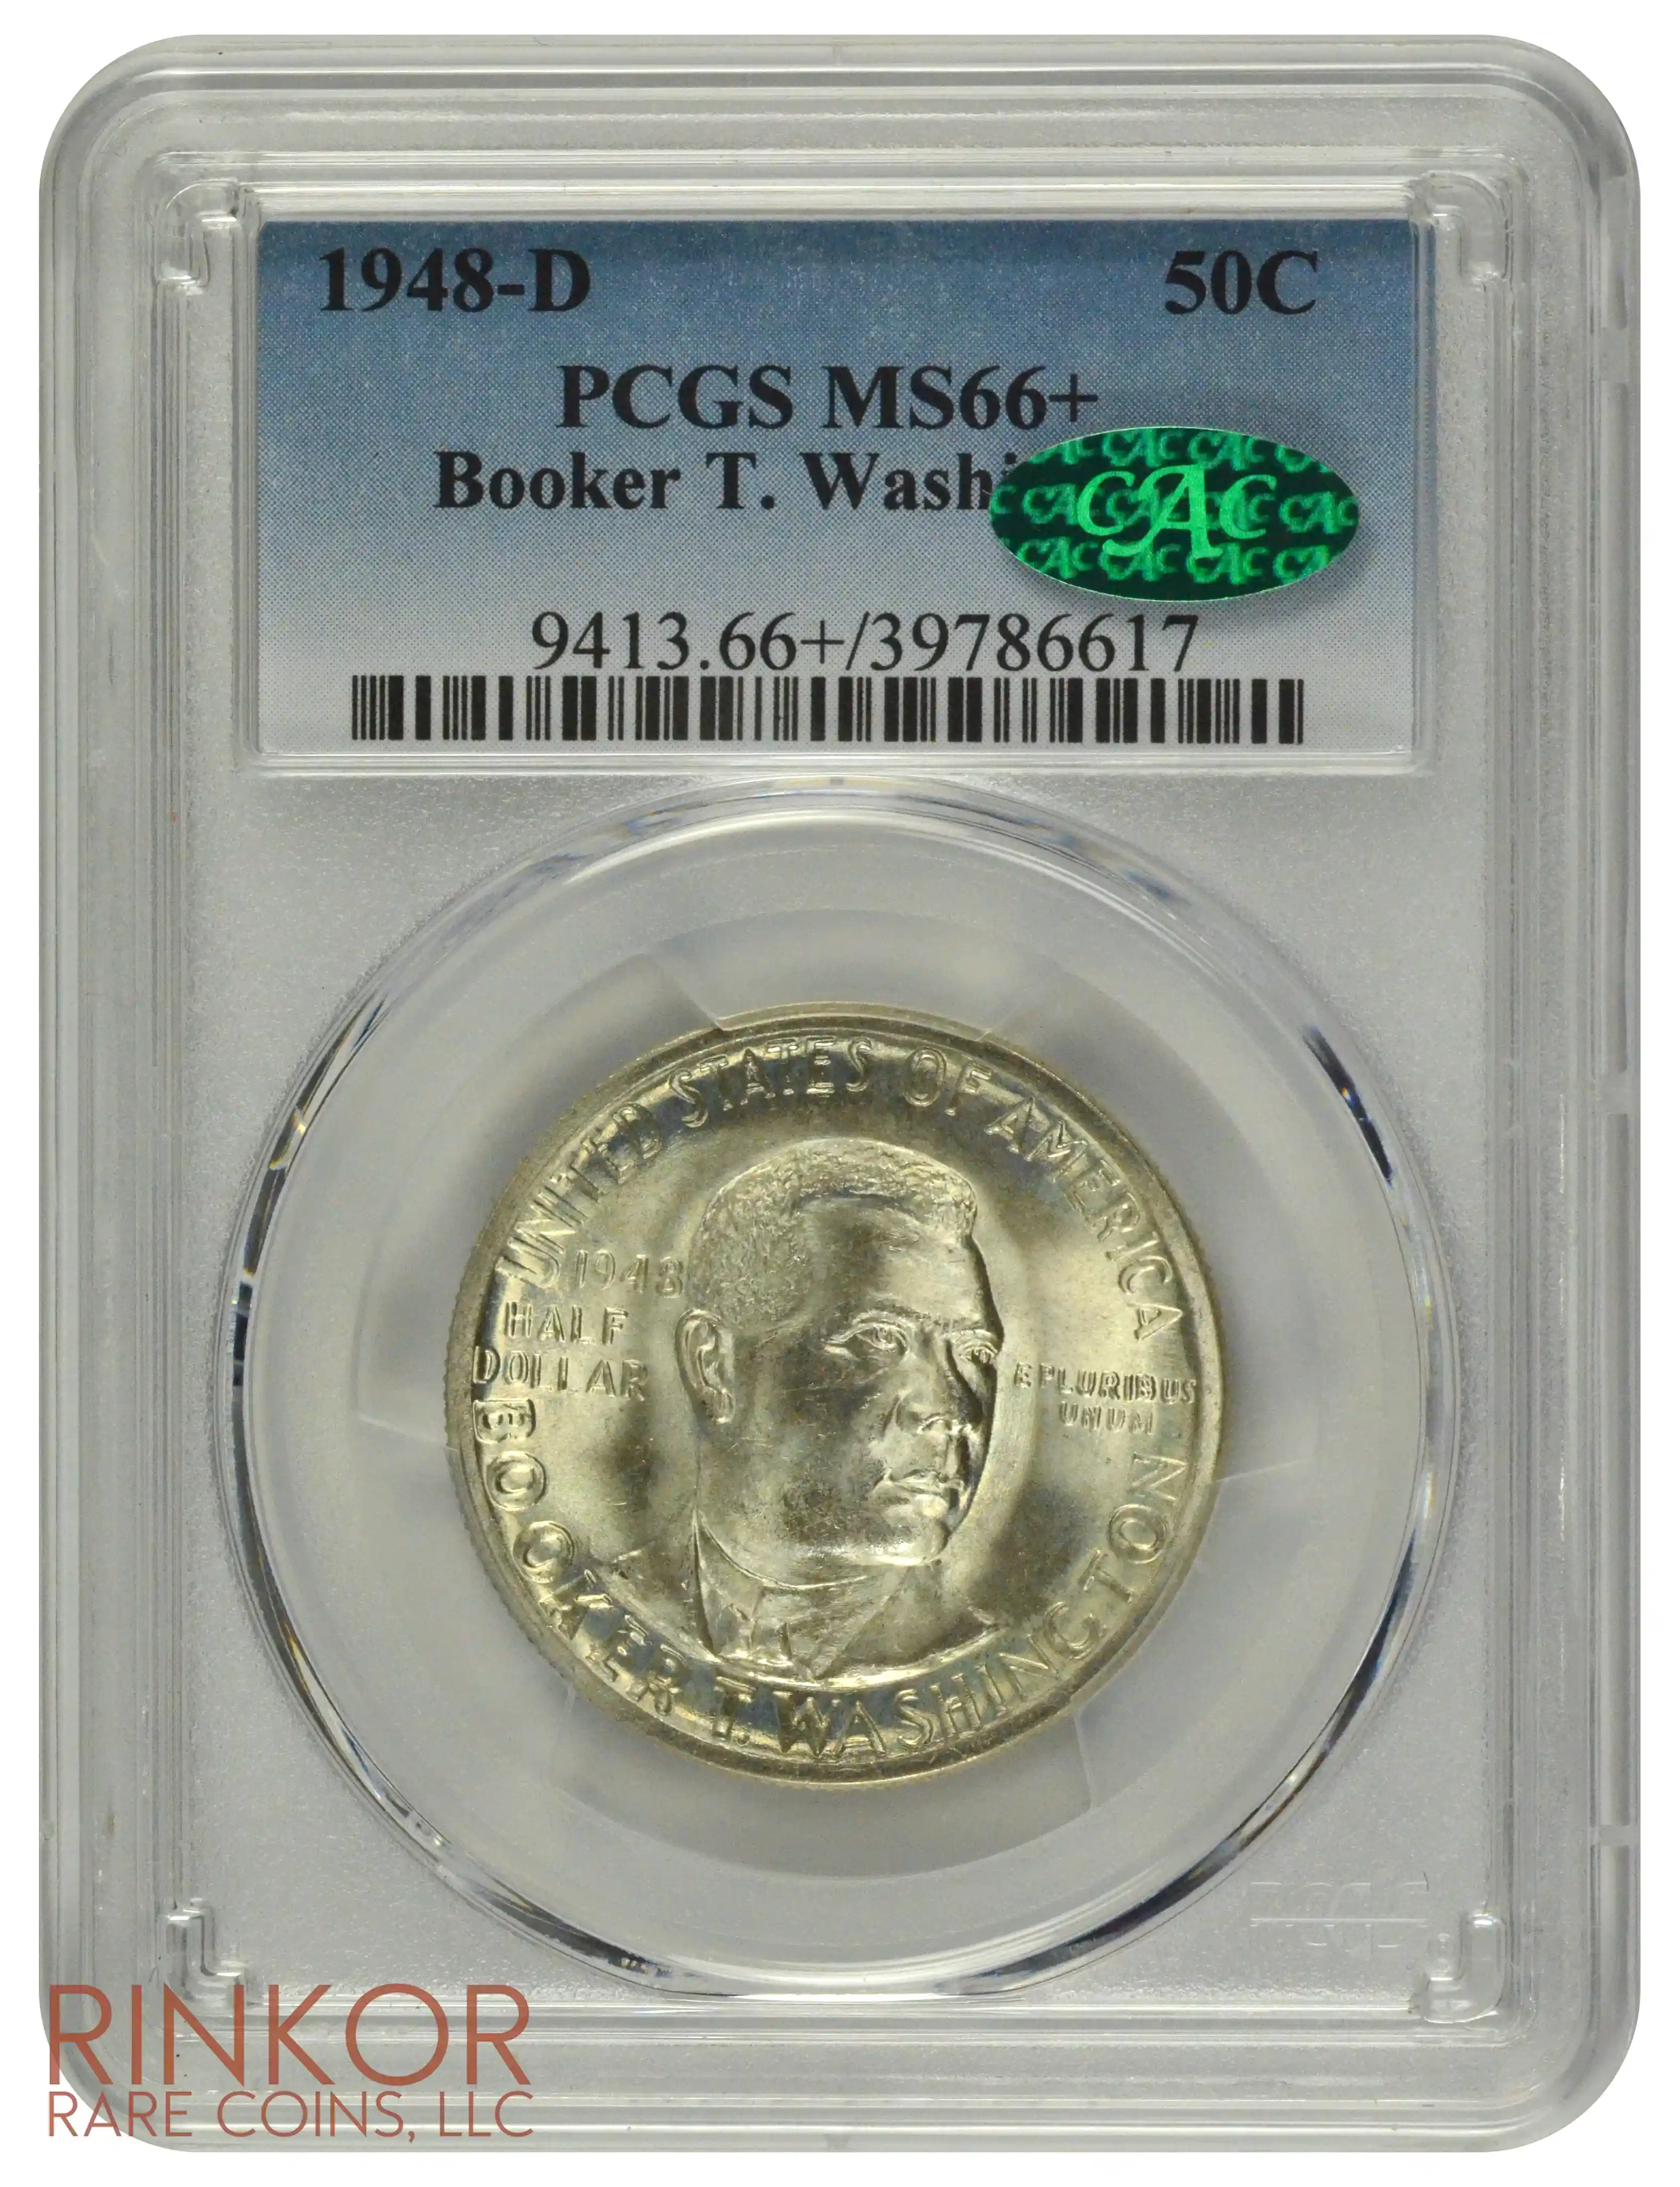 1948-D Booker T. Washington Commemorative Half Dollar PCGS MS 66+ CAC